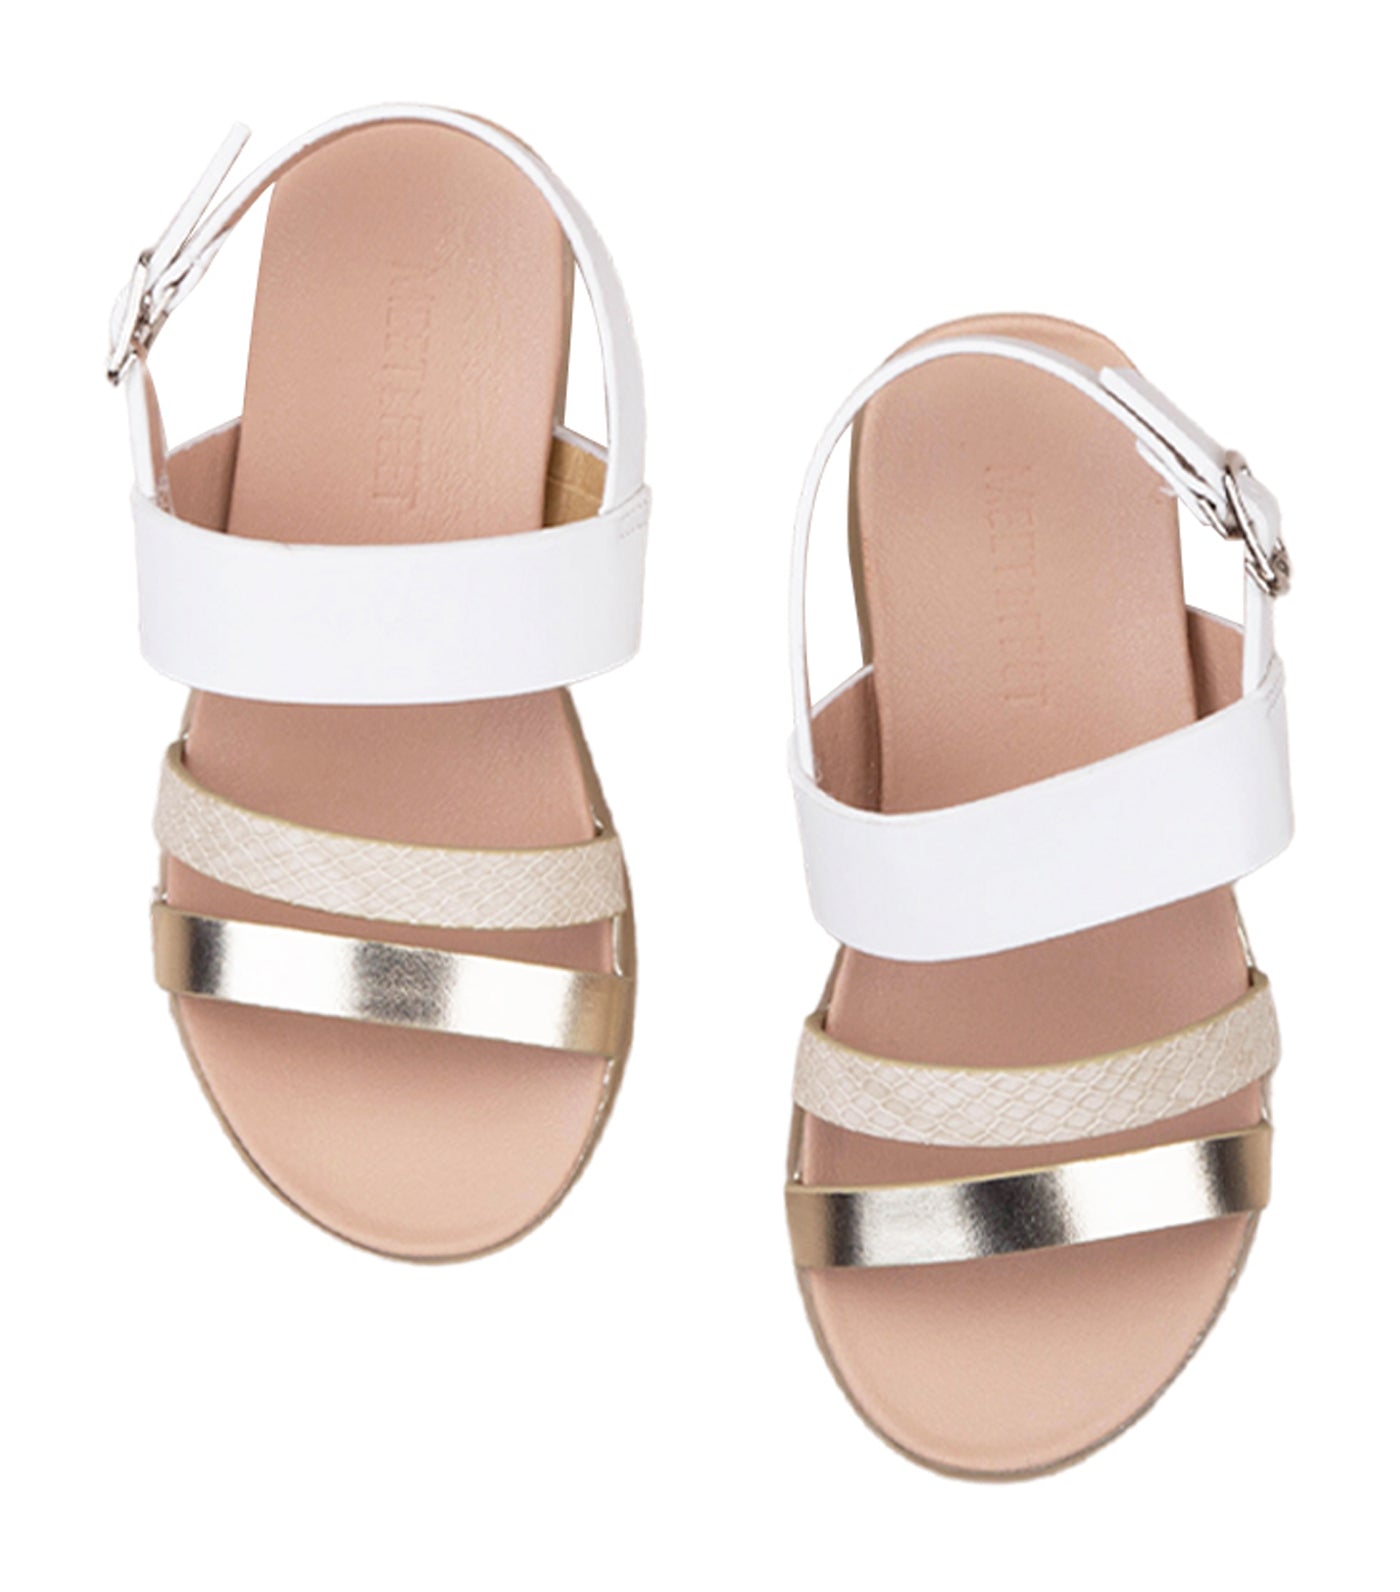 Blessy Kids Sandals for Girls - Gold